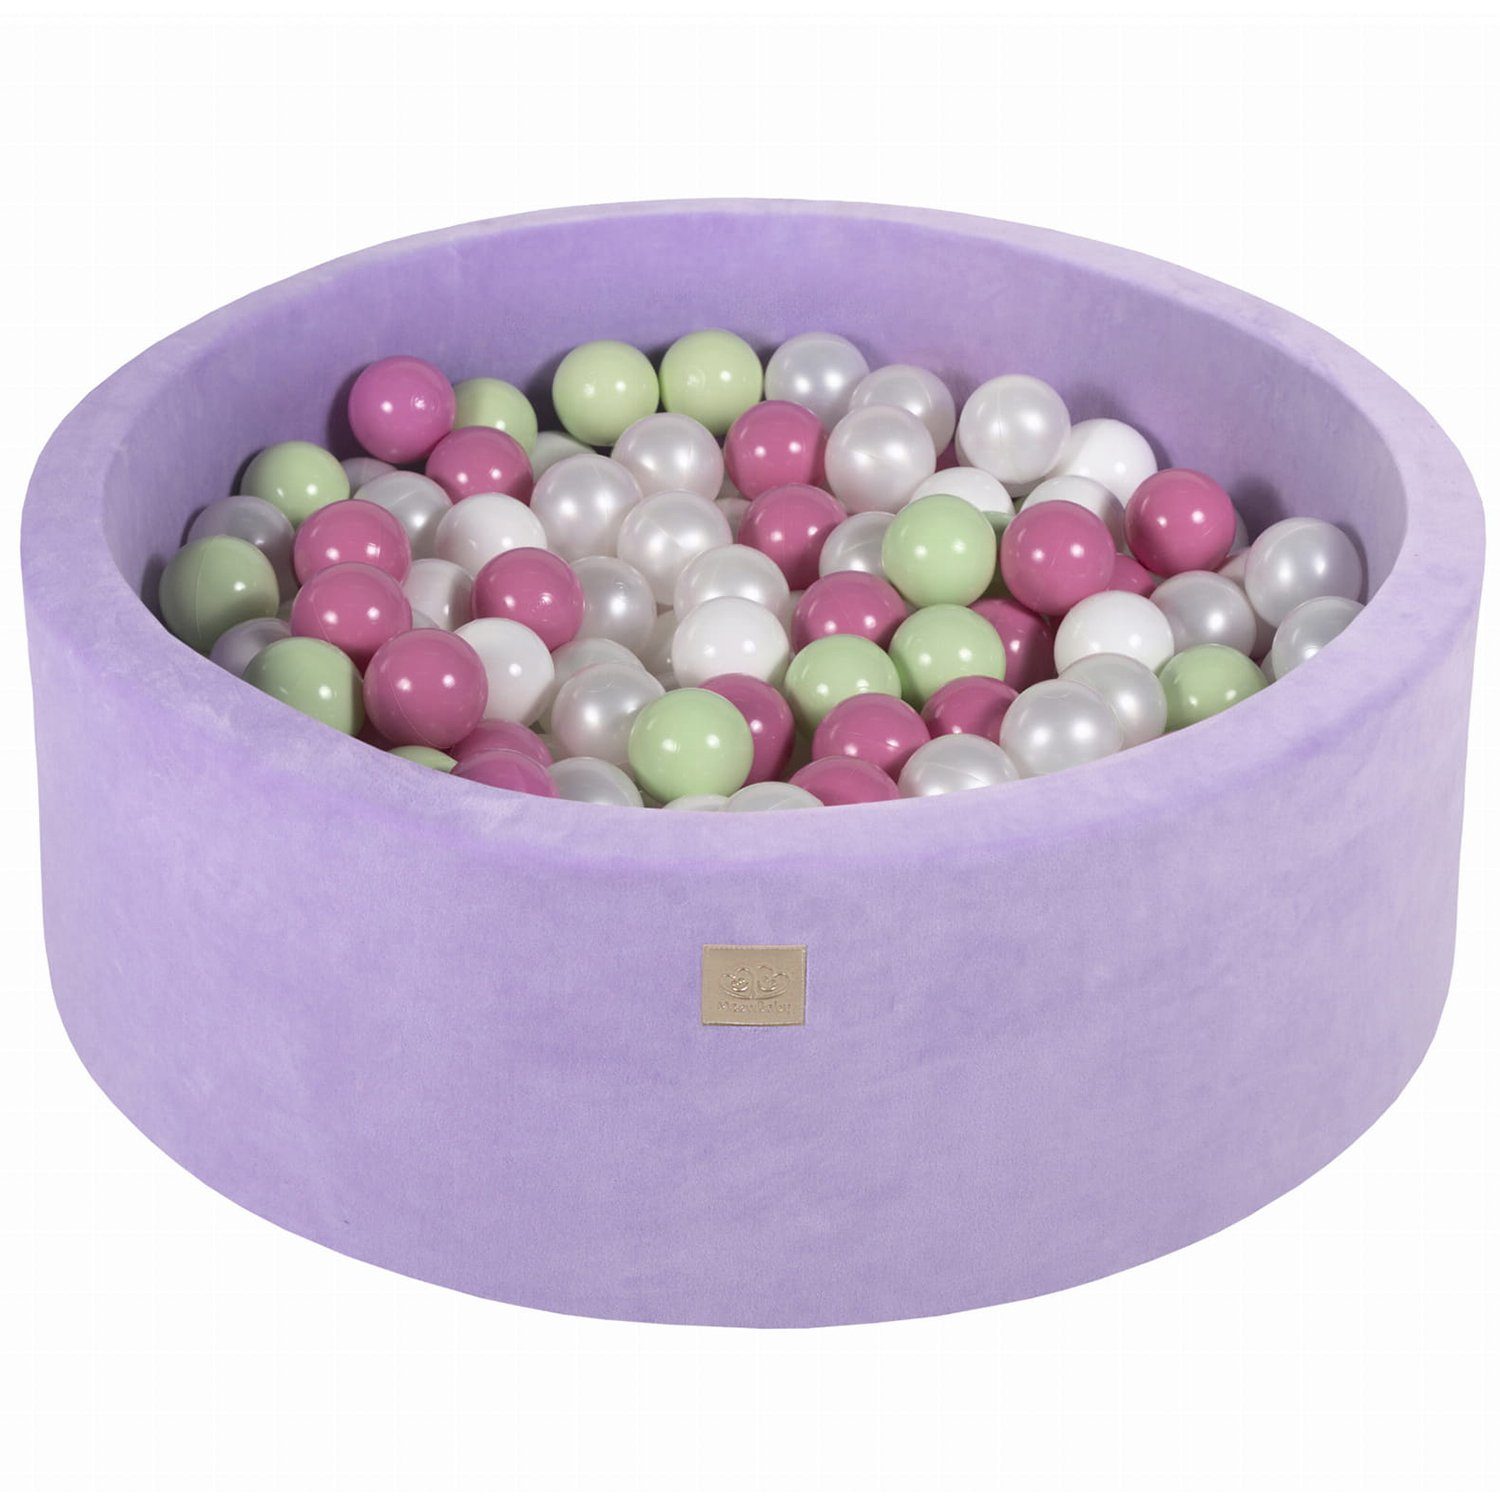 MeowBaby Bällebad Bällebad für Kinder und Babys - Velvet Lilac -  Bällchenbad, (Bällebad mit 200 Bällen), Rundes Kugelbad 90x30cm mit 200  Bunten Bällen, waschbarer Bezug